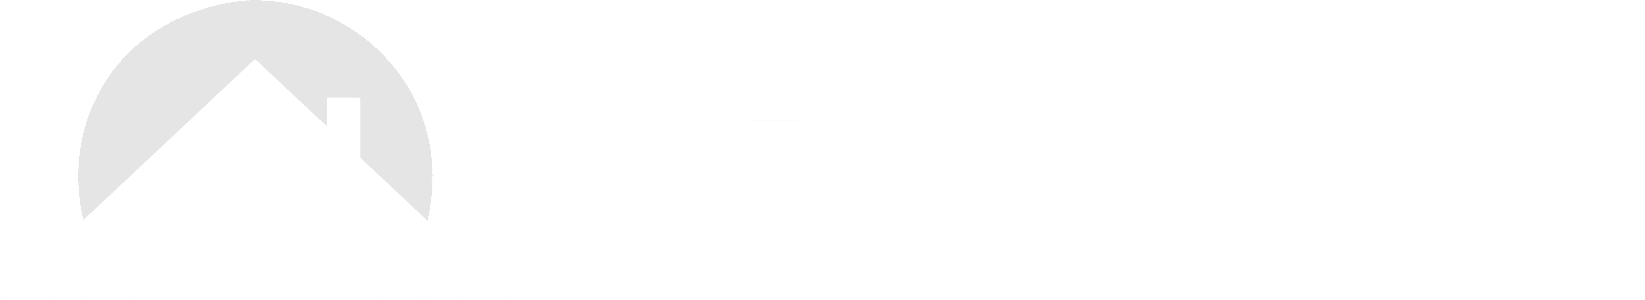 carlyle home service logo white